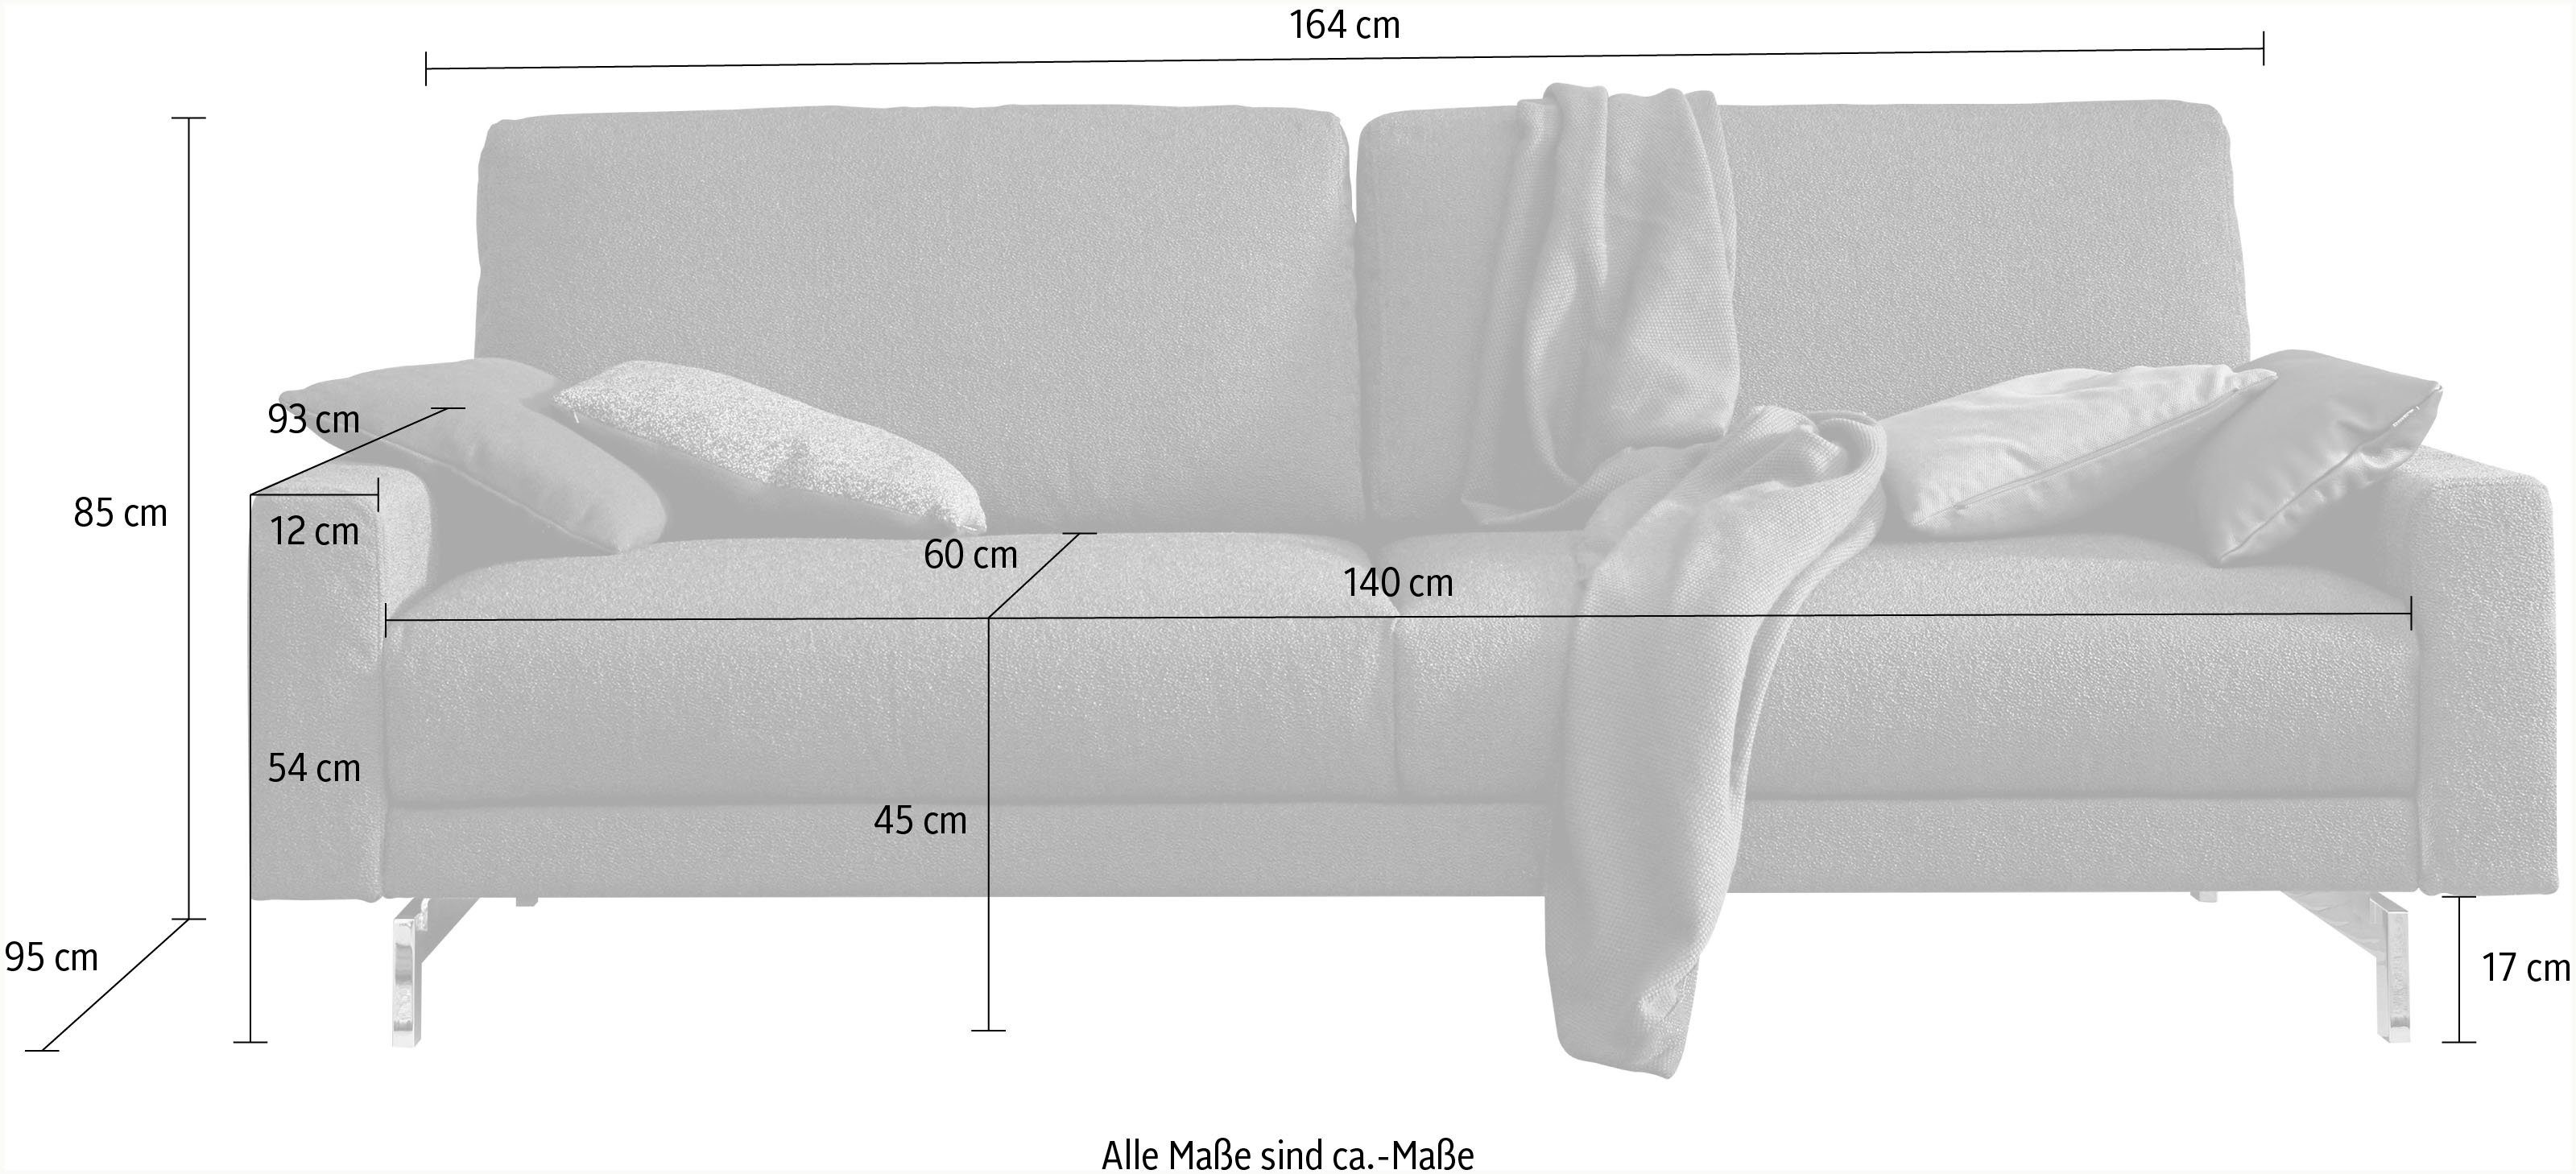 Breite 2-Sitzer niedrig, hülsta Fuß chromfarben 164 cm glänzend, hs.450, sofa Armlehne